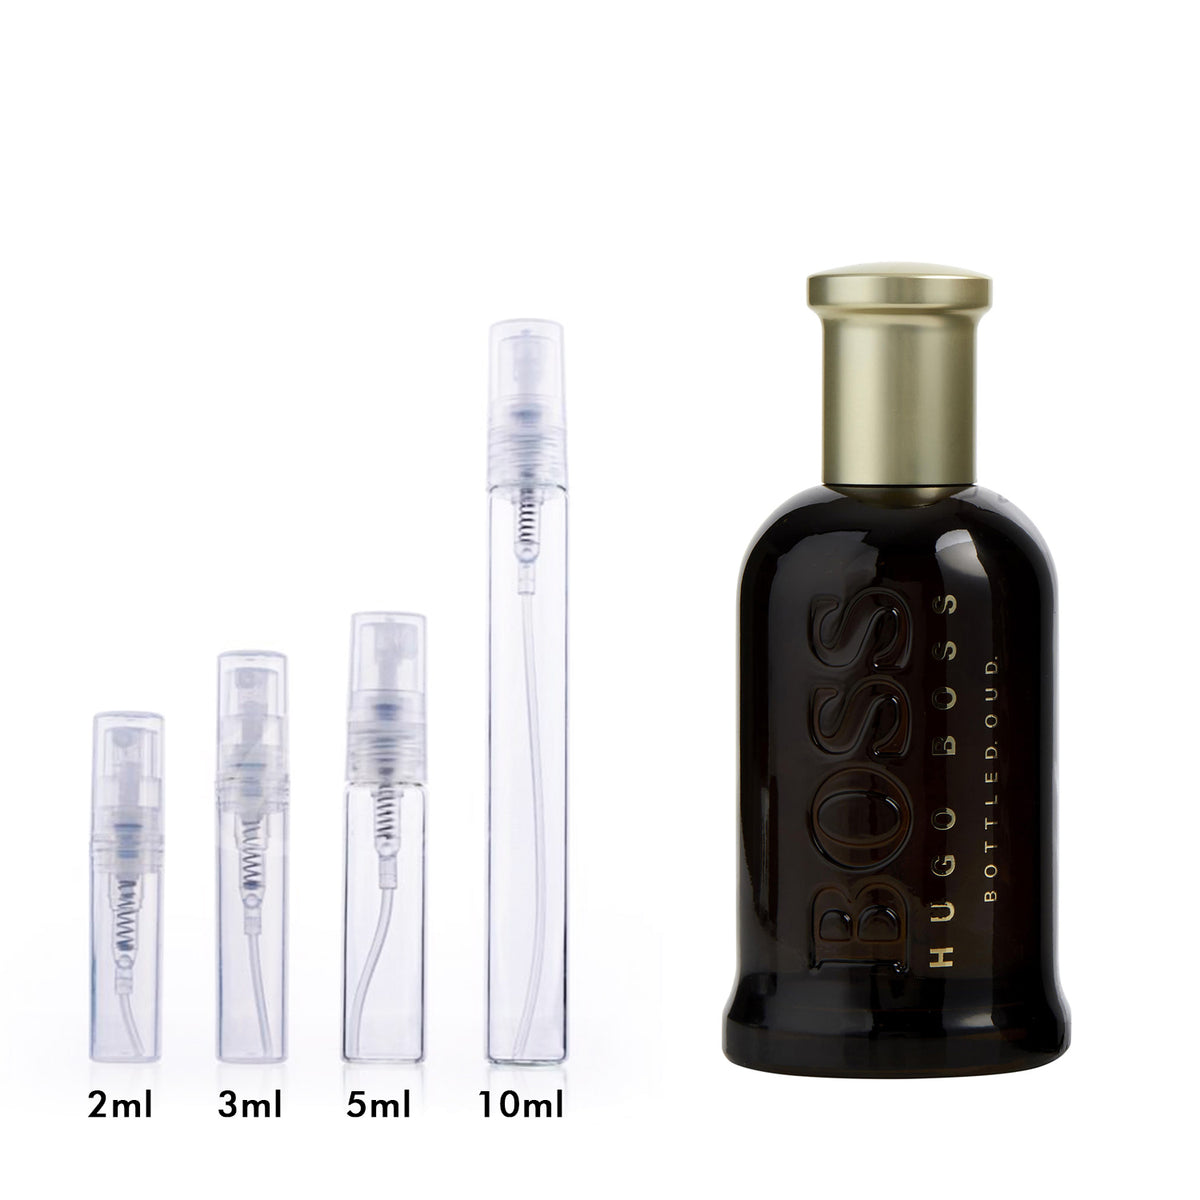 Smelte illoyalitet Fremsyn HUGO BOSS Bottled Oud Eau de Parfum for Men – DecantX Perfume & Cologne  Decant Fragrance Samples